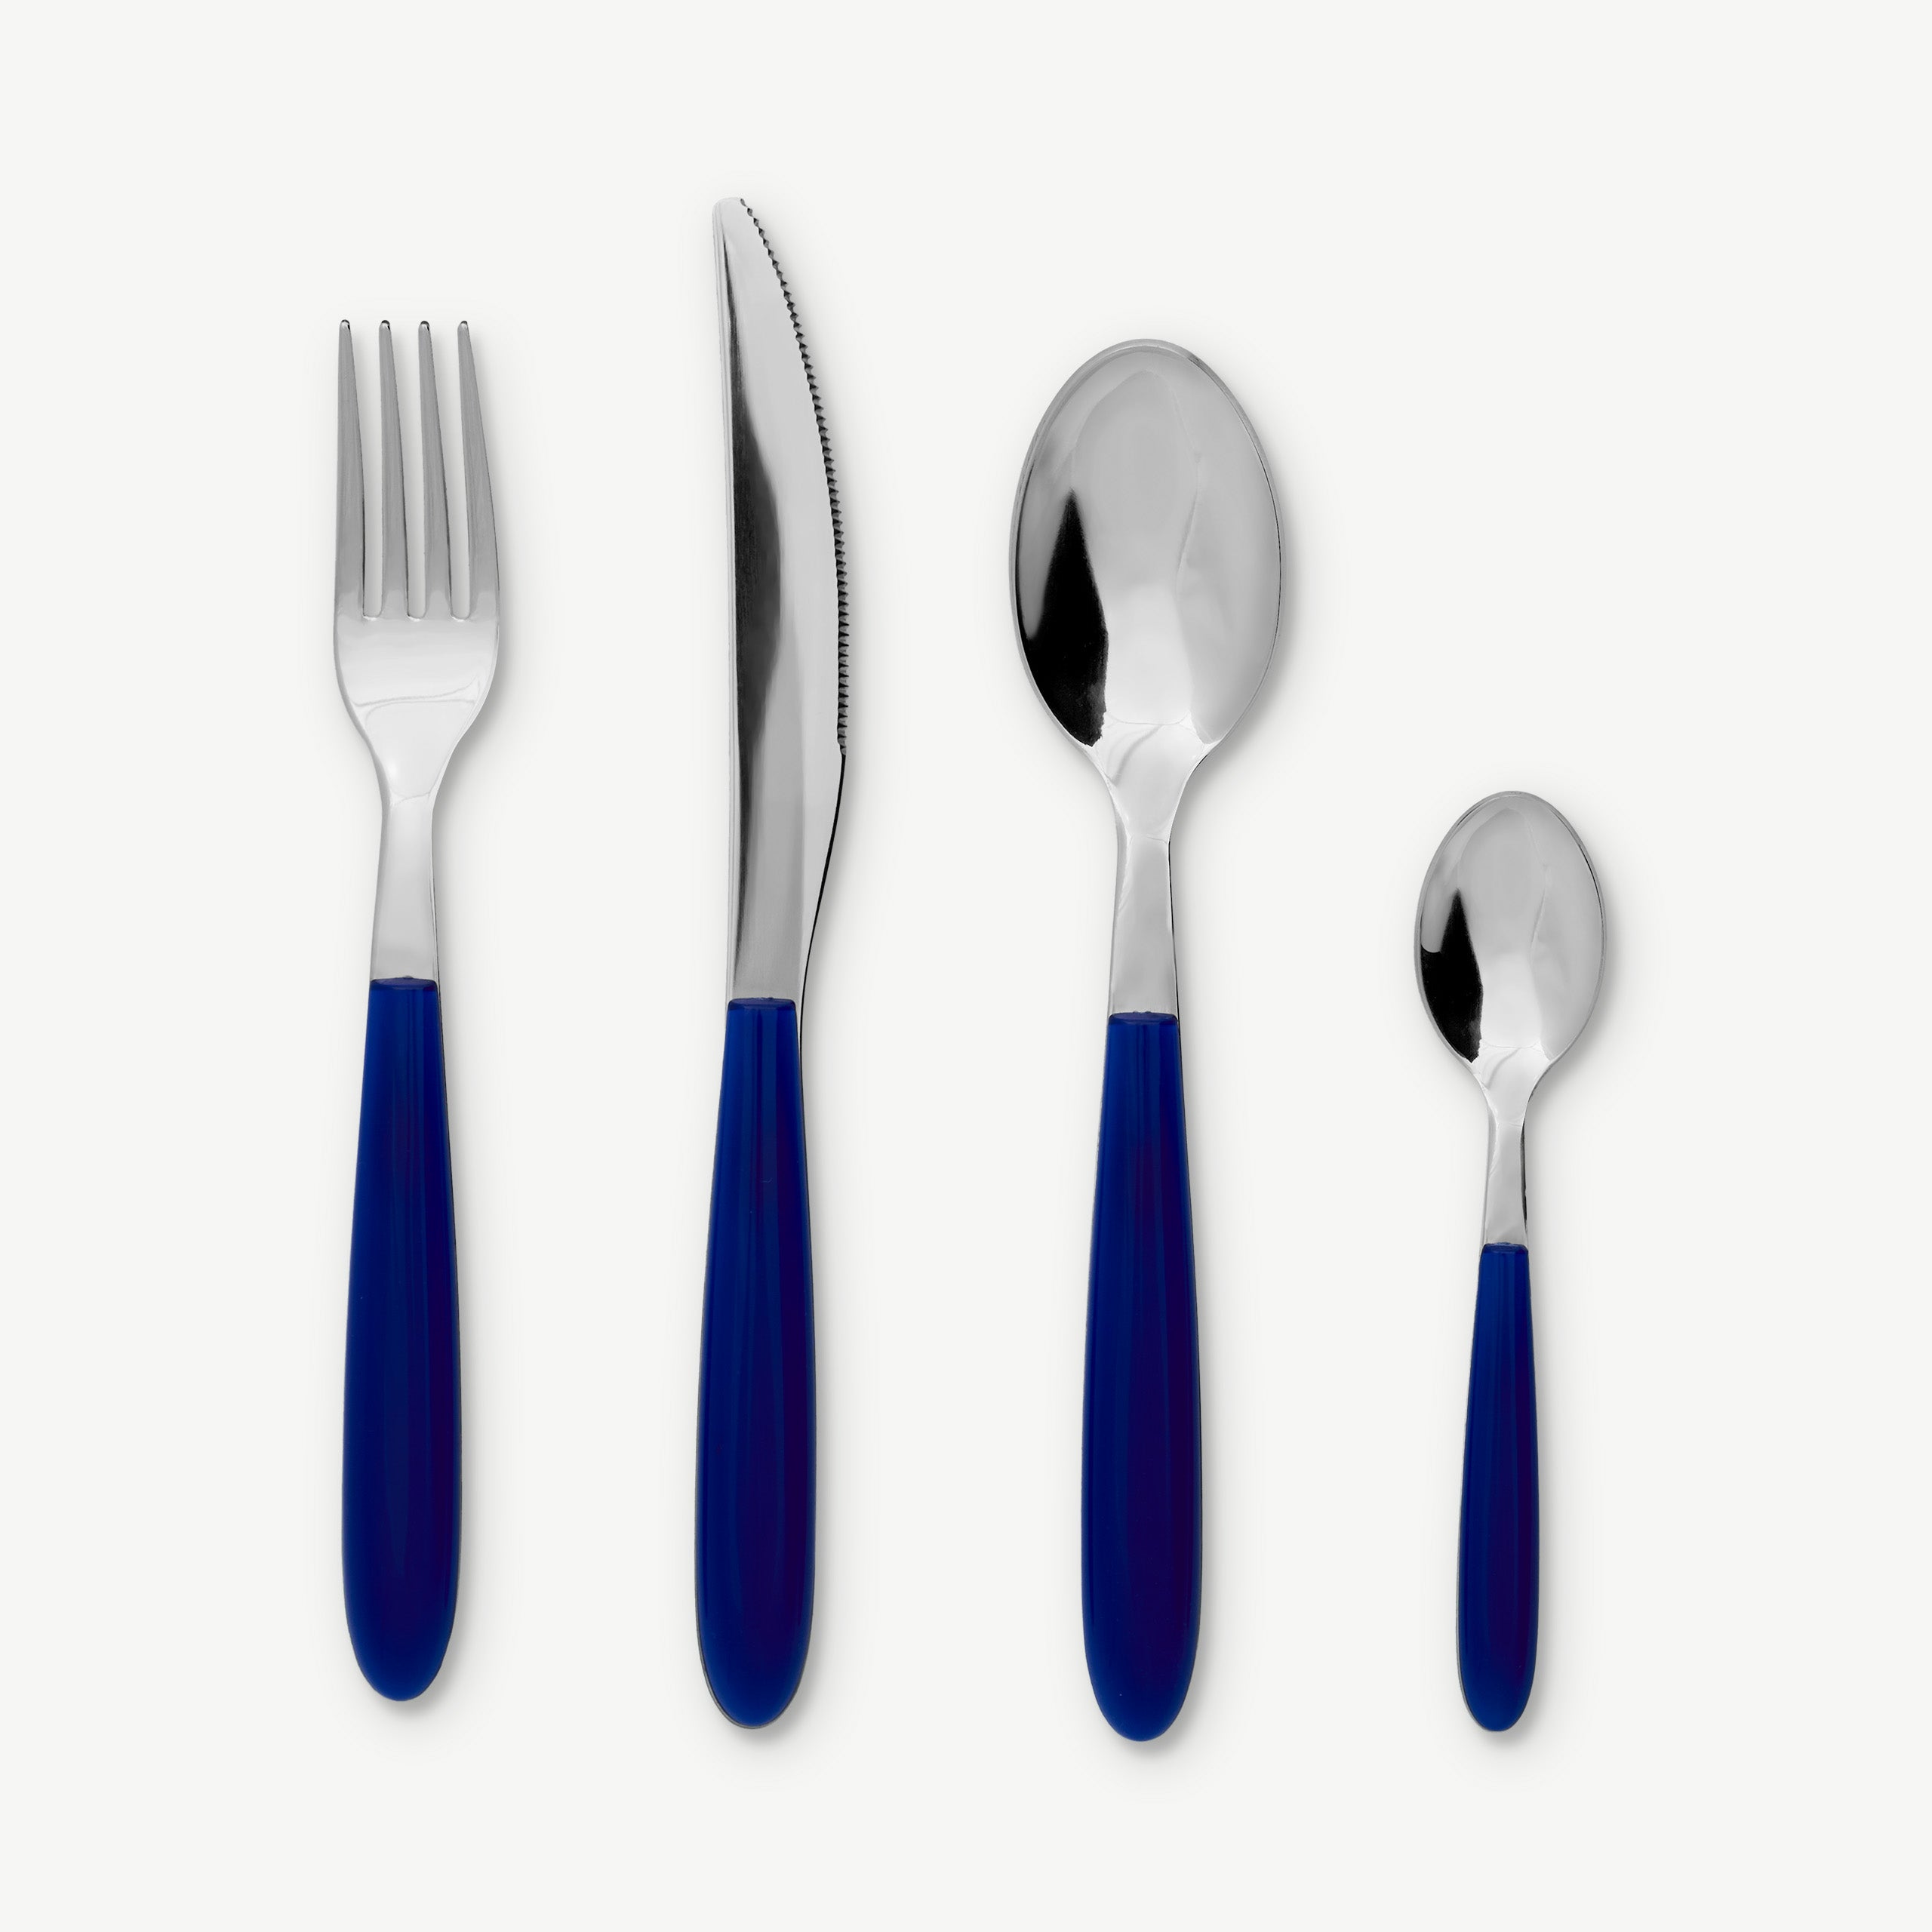 Vero 16pc Stainless Steel Cutlery Set, Cobalt Blue